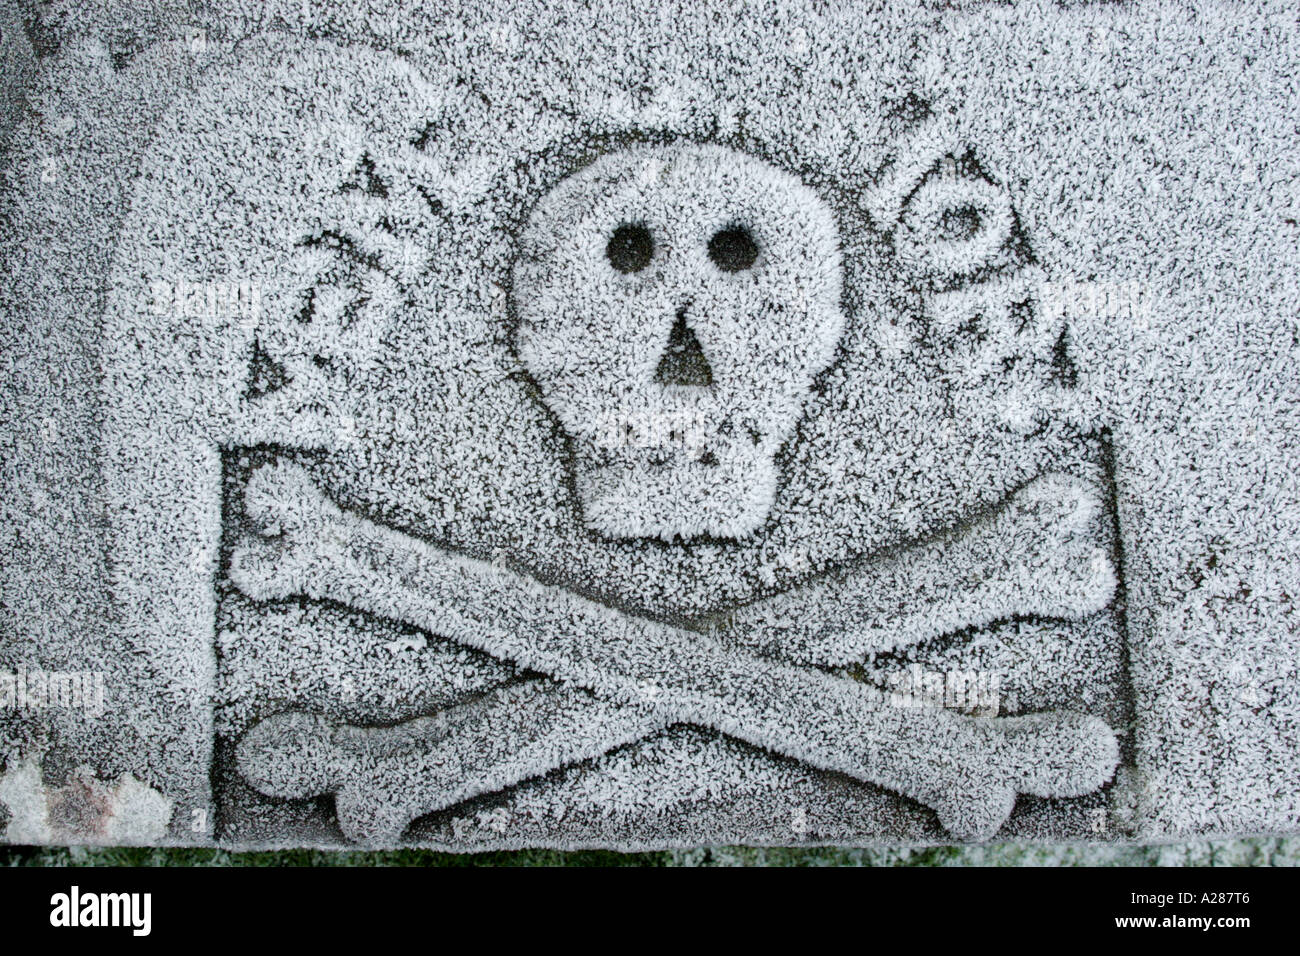 Skull and crossed bones design on gravestone covered in frost Stock Photo